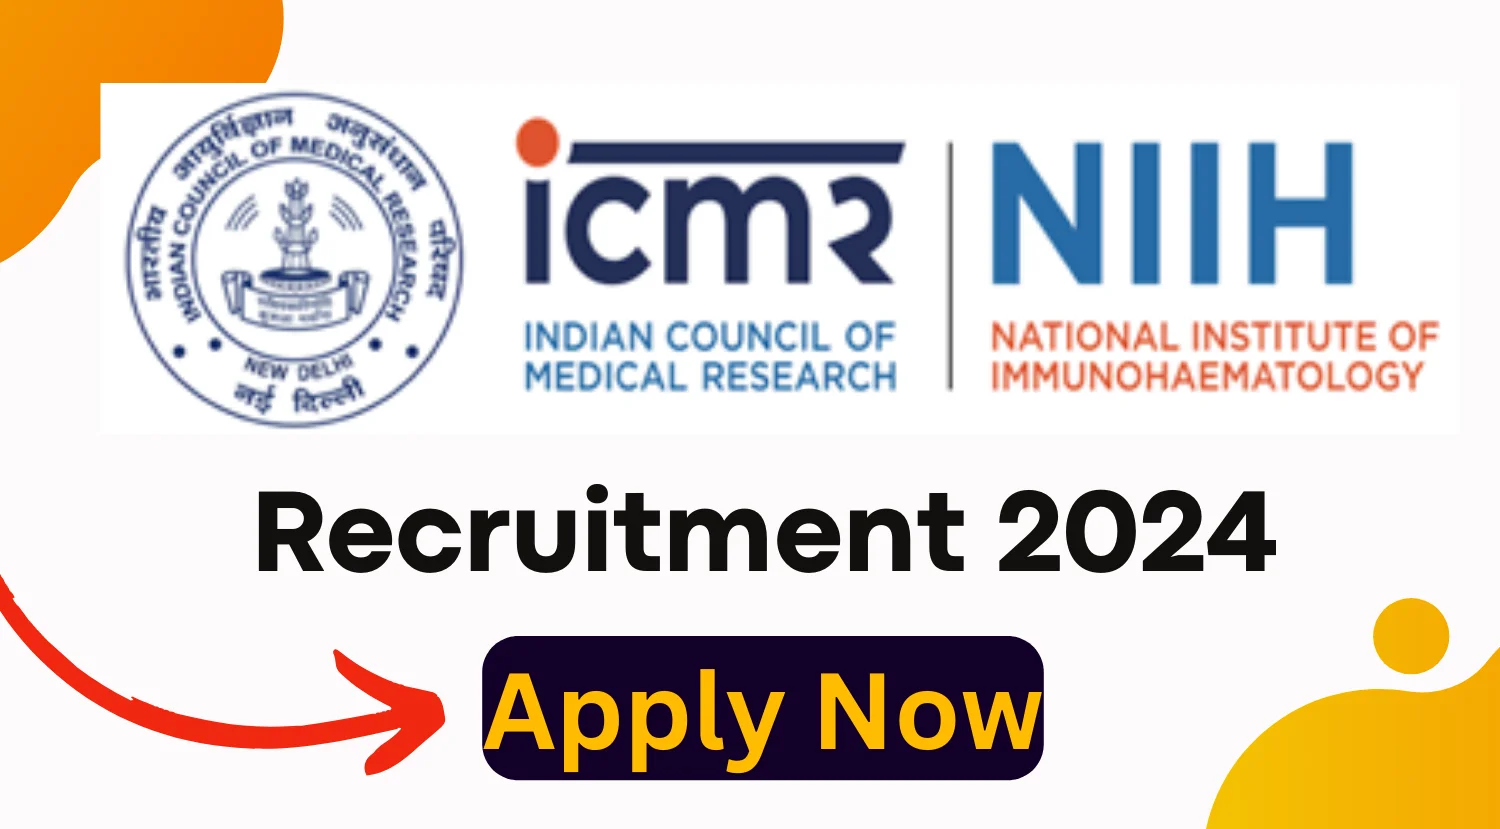 ICMR-NIIH Recruitment 2024